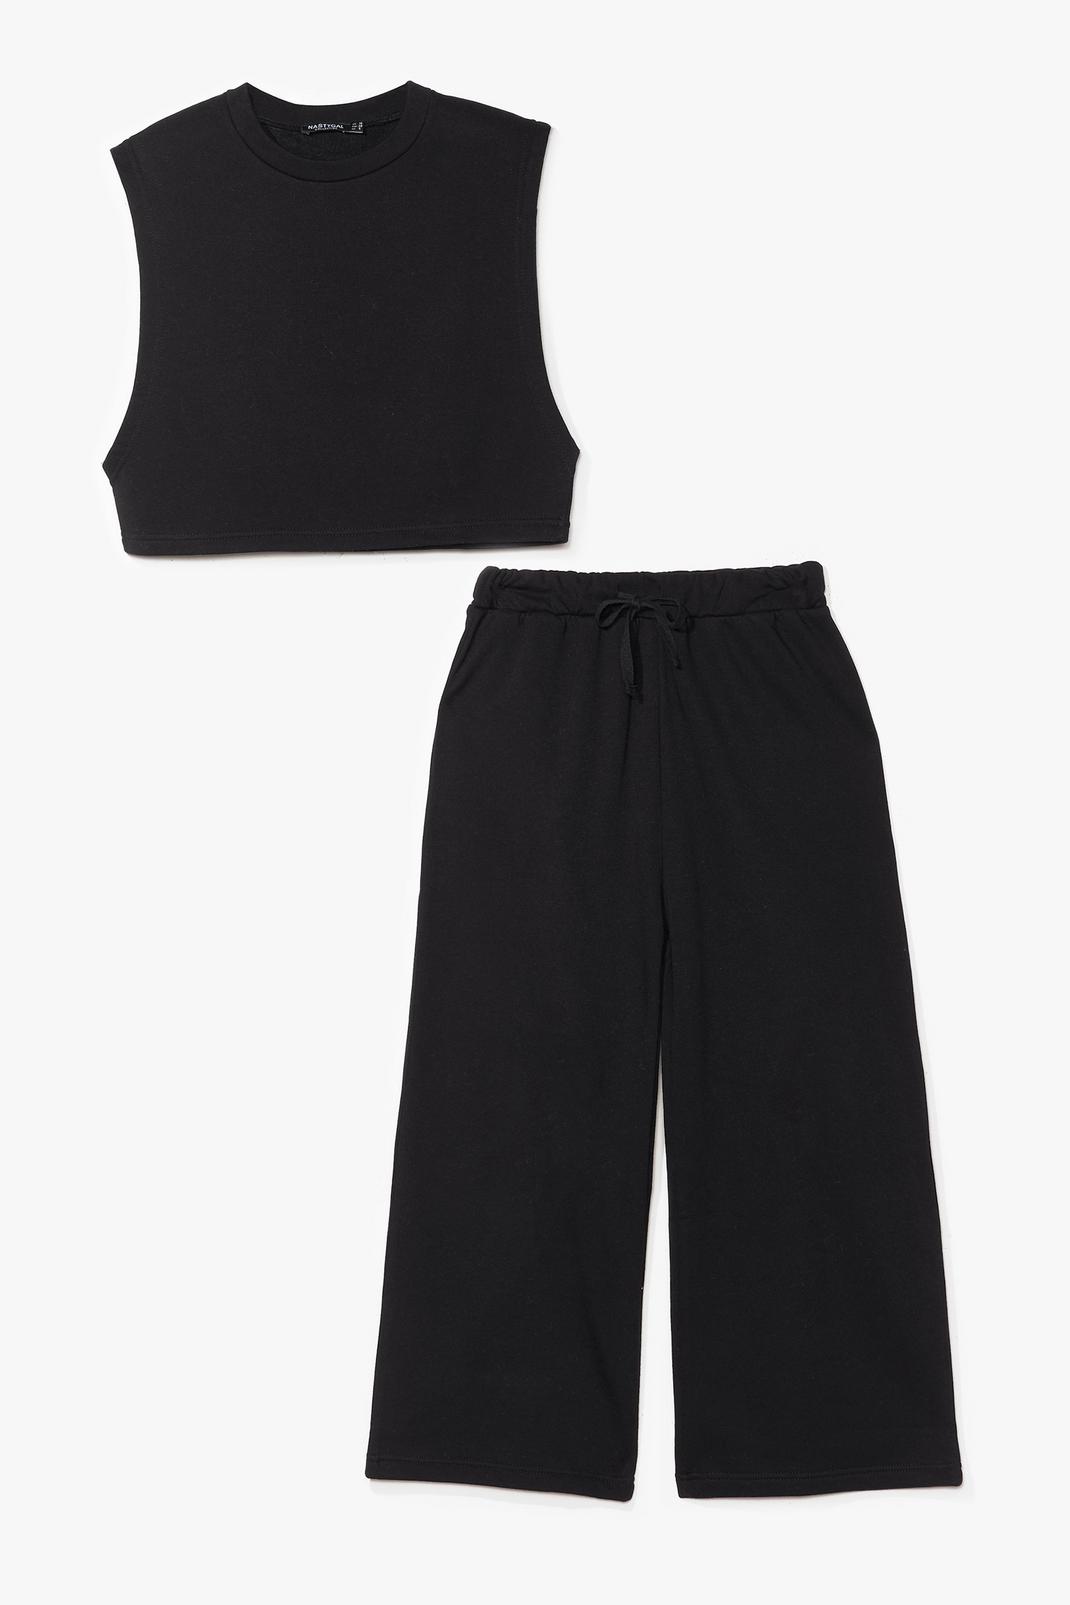 Black Cropped Vest Top and Pants Loungewear Set image number 1